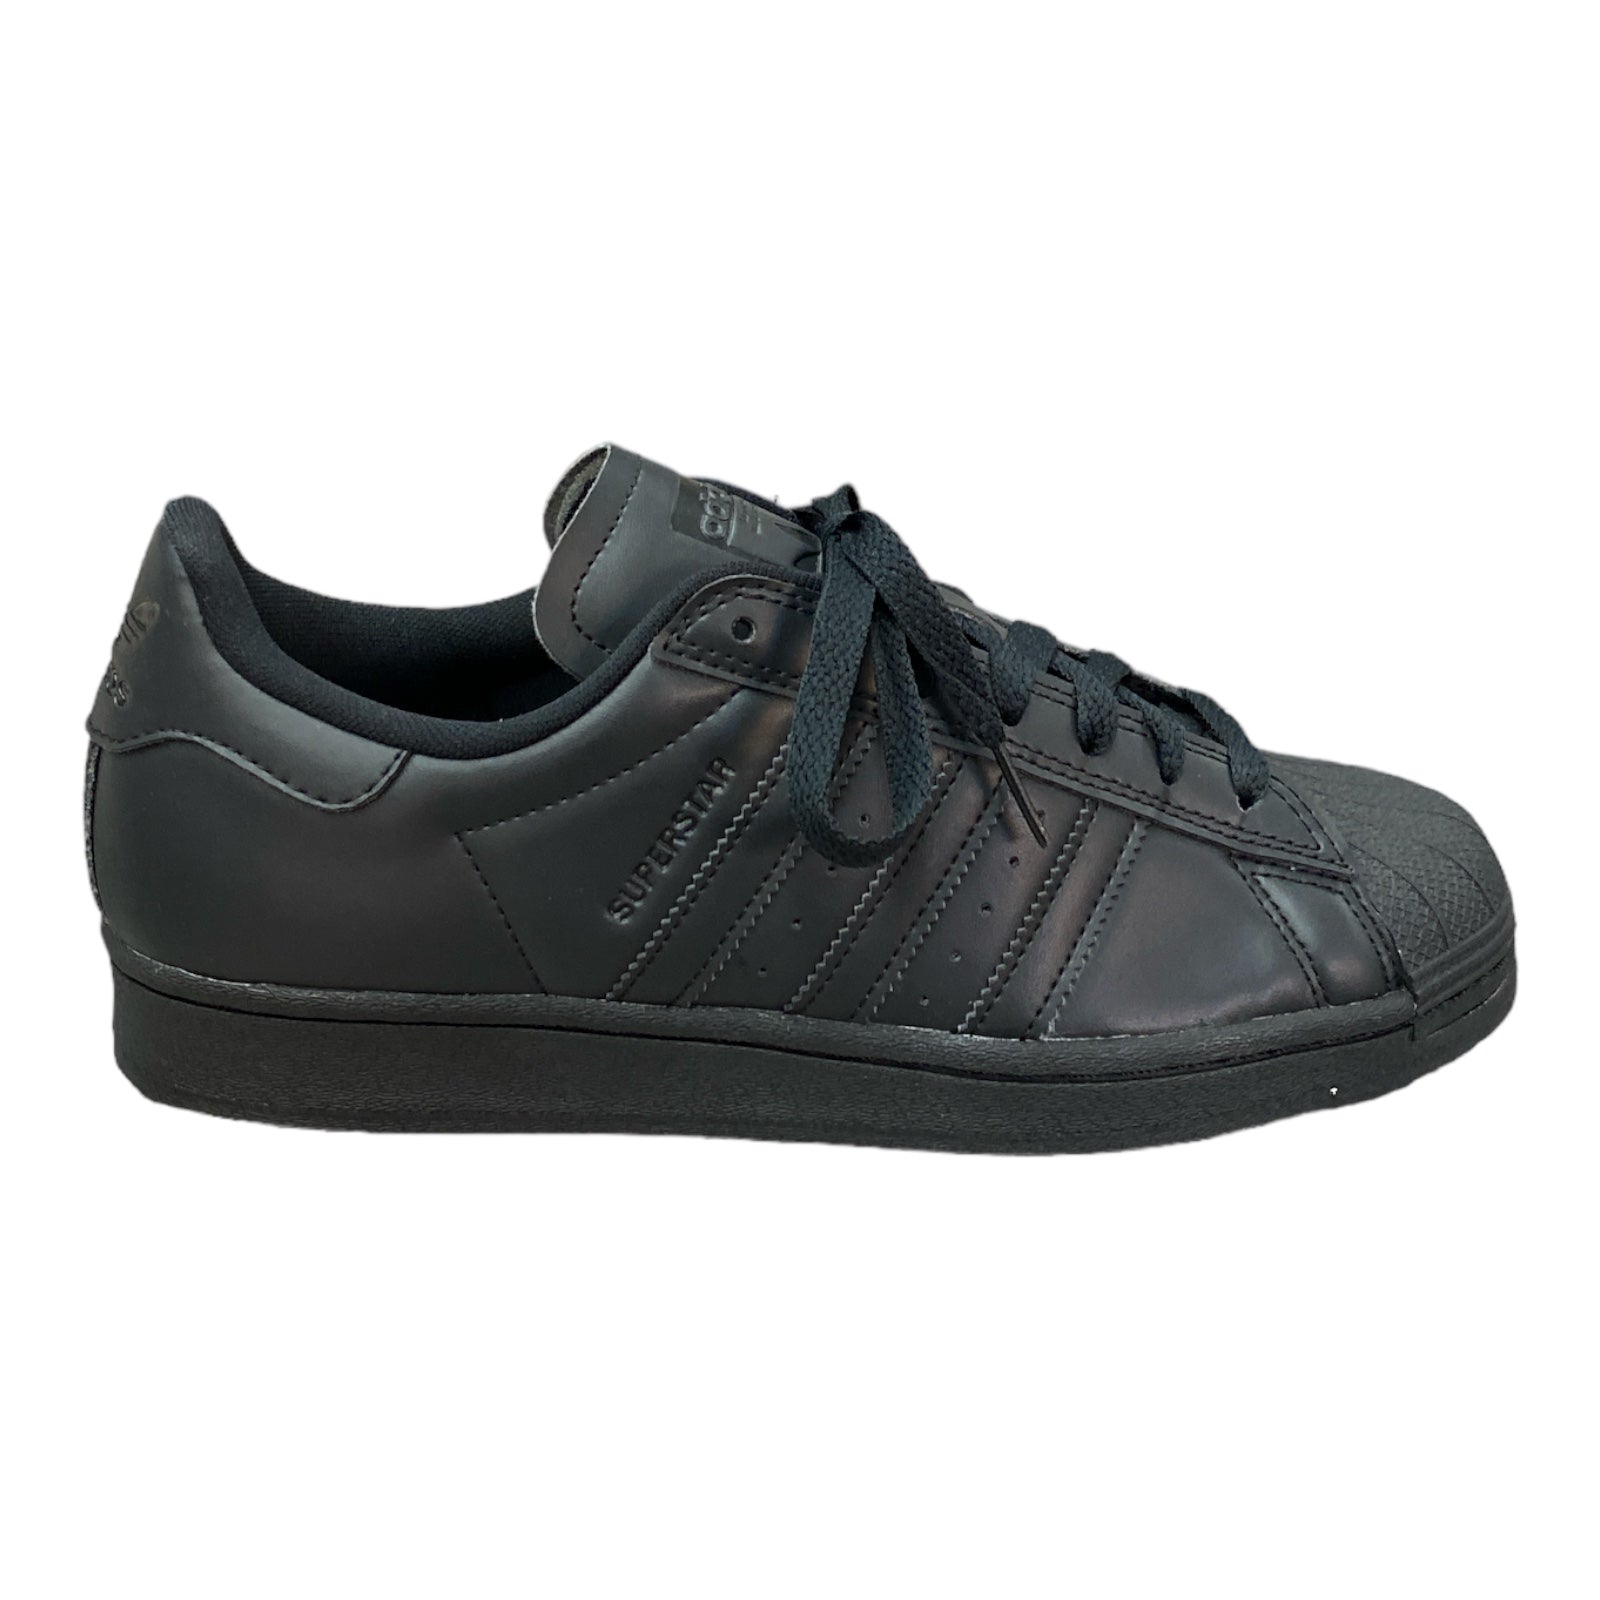 All Black Leather Adidas Superstar ADV Shoe